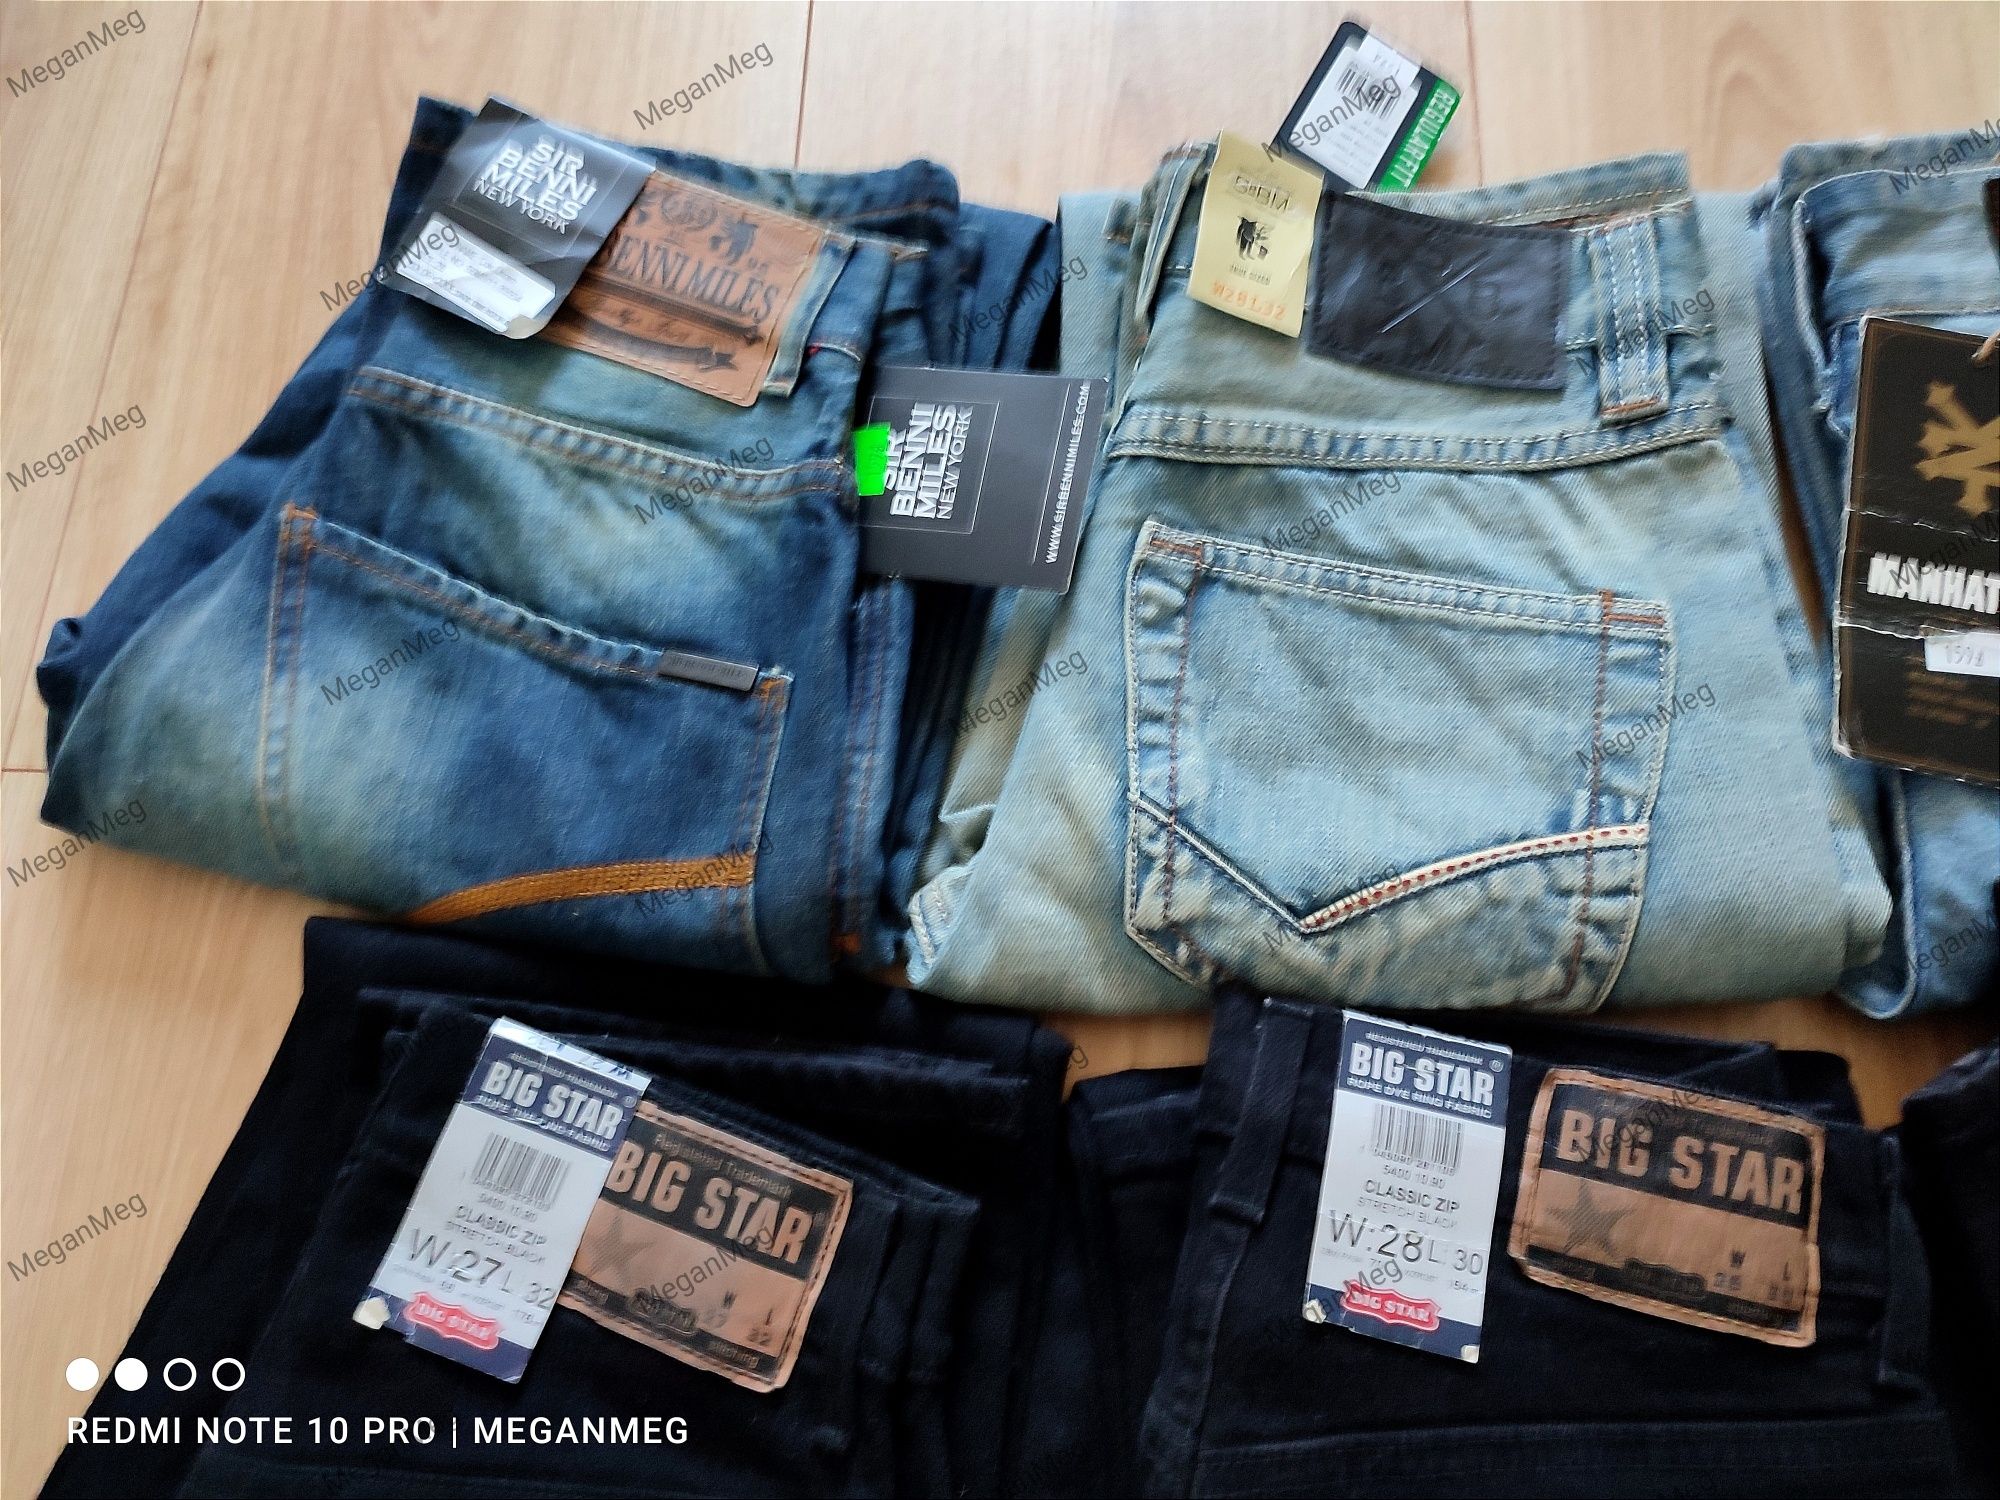 Big Star spodnie męskie Manhattan Benni Miles New York jeansy S M L